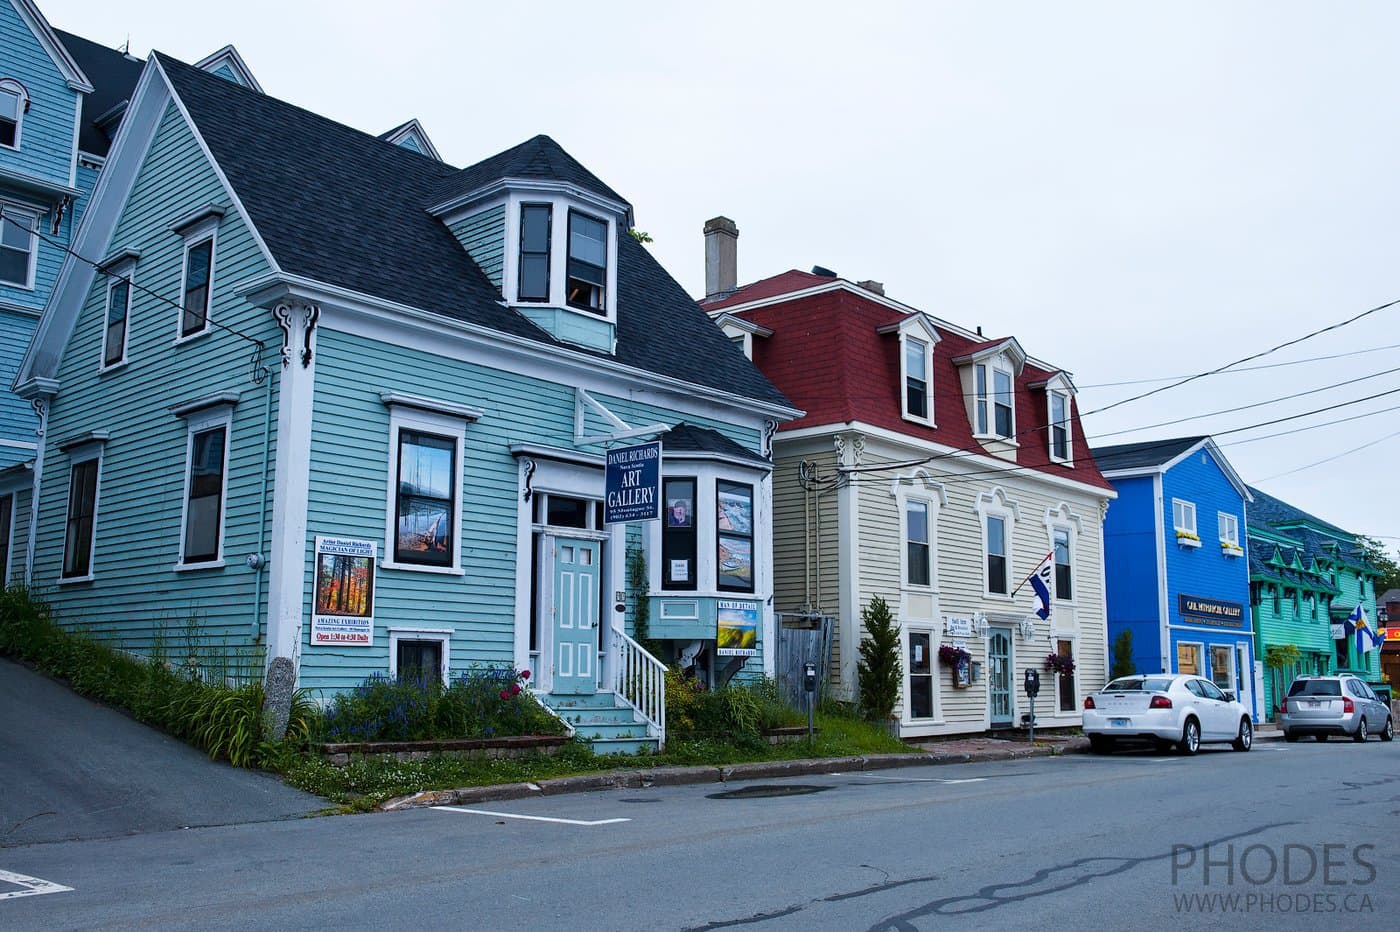 Houses in Lunenburg in Nova Scotia